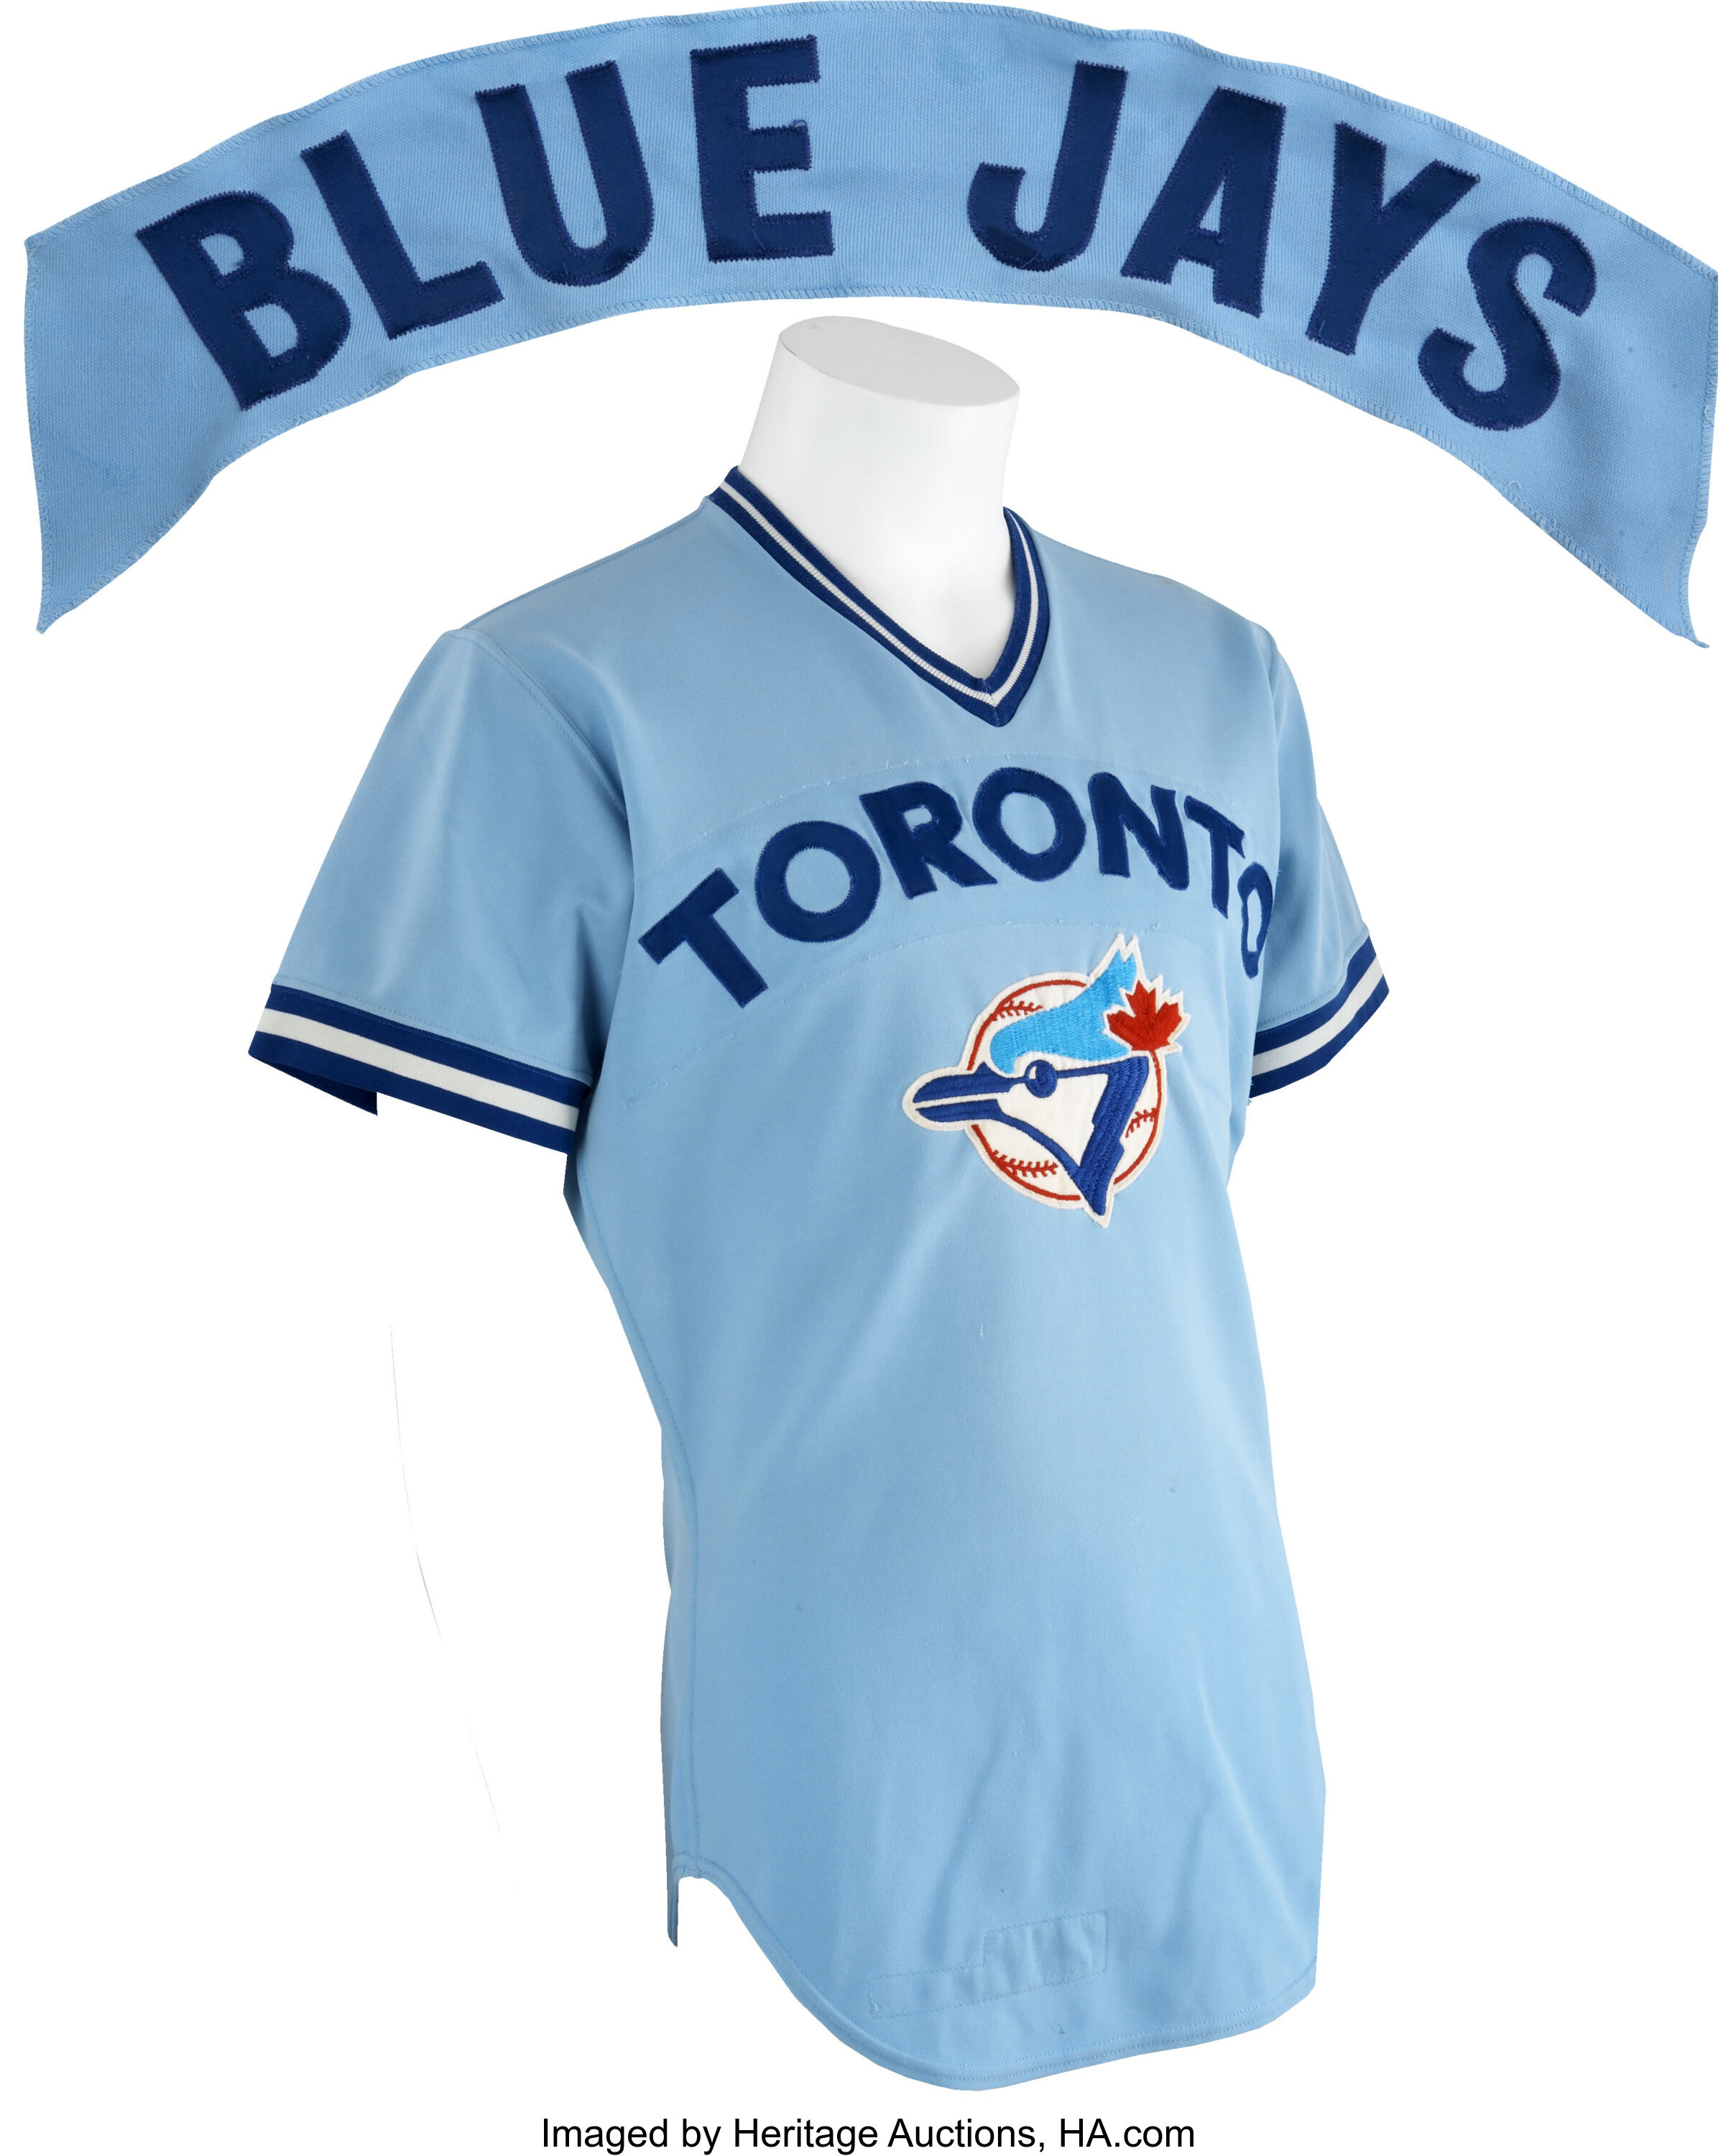 1977 Toronto Blue Jays Inaugural Season Game Worn Jersey., Lot #19849